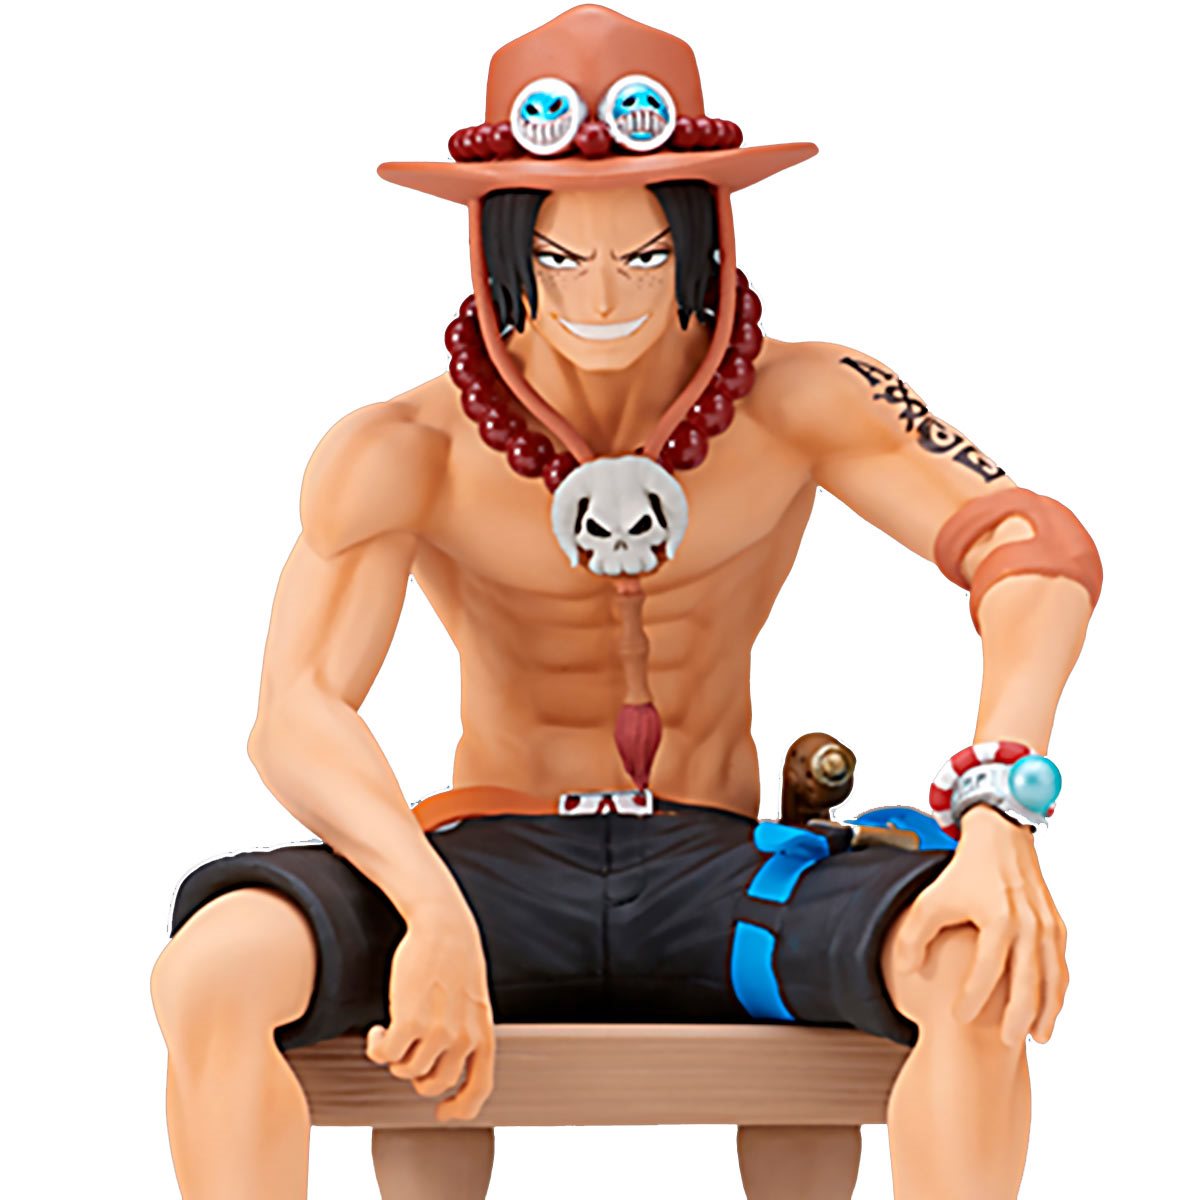 OG Portgas. D Ace One Piece funko